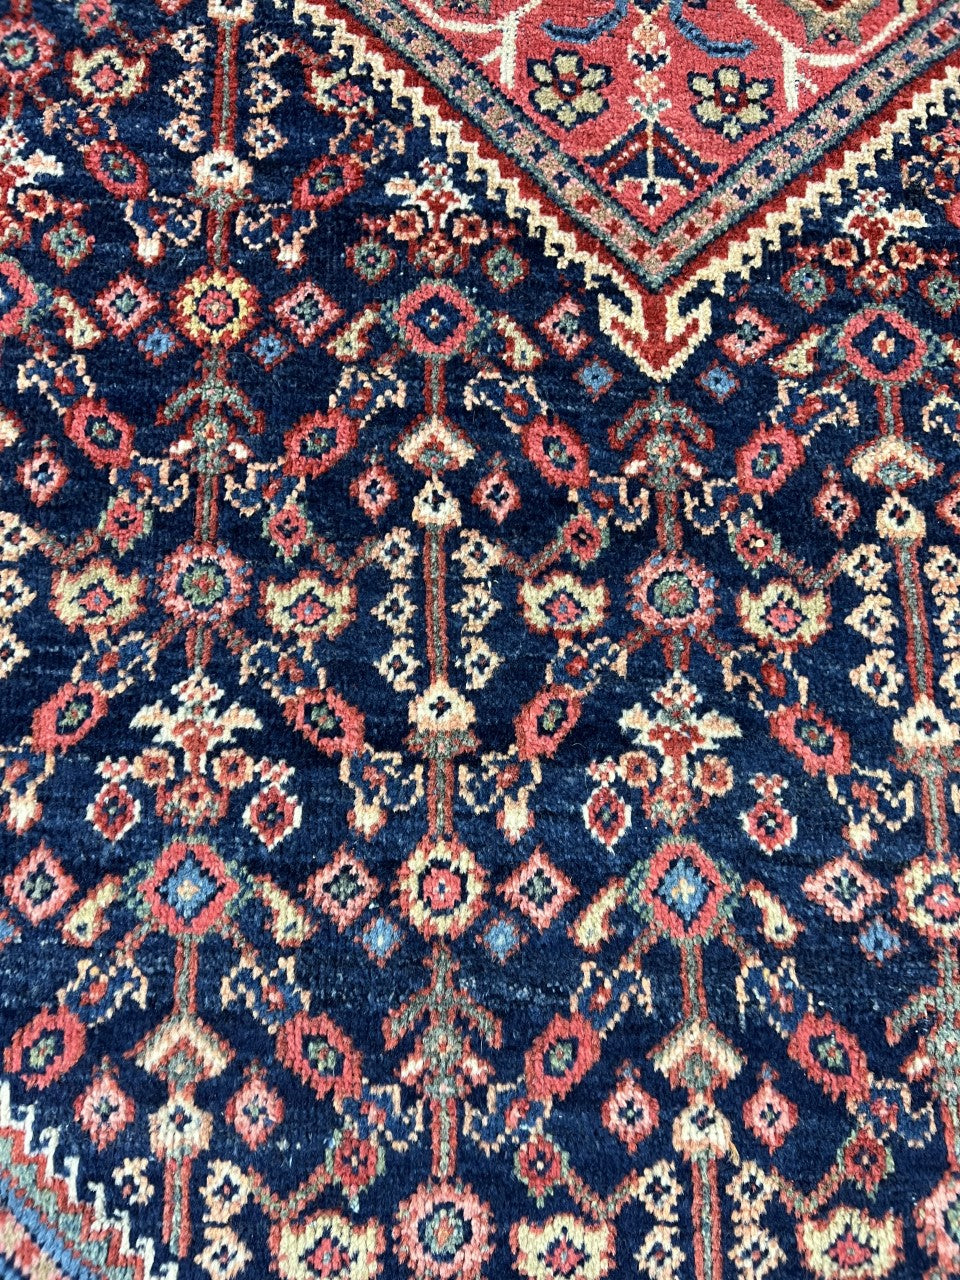 Amazing old antique handmade Mahal rug - Hakiemie Rug Gallery